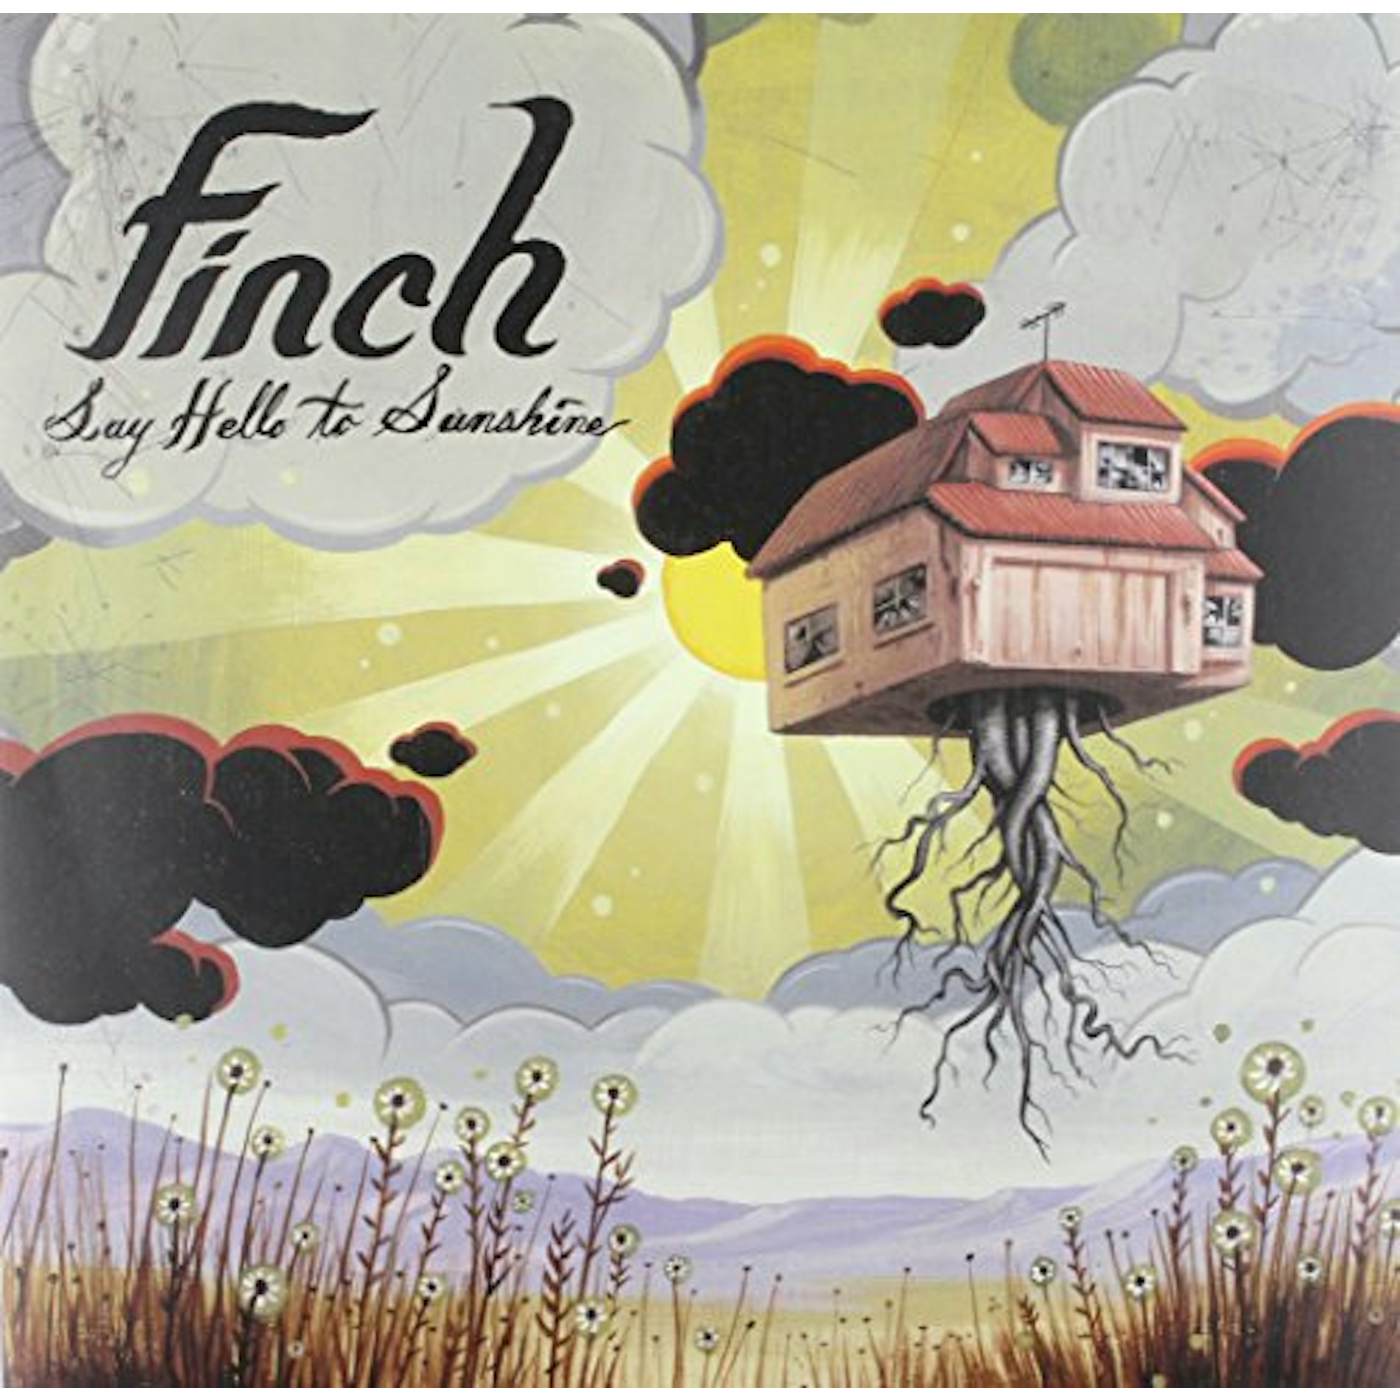 Finch Say Hello To Sunshine Vinyl Record